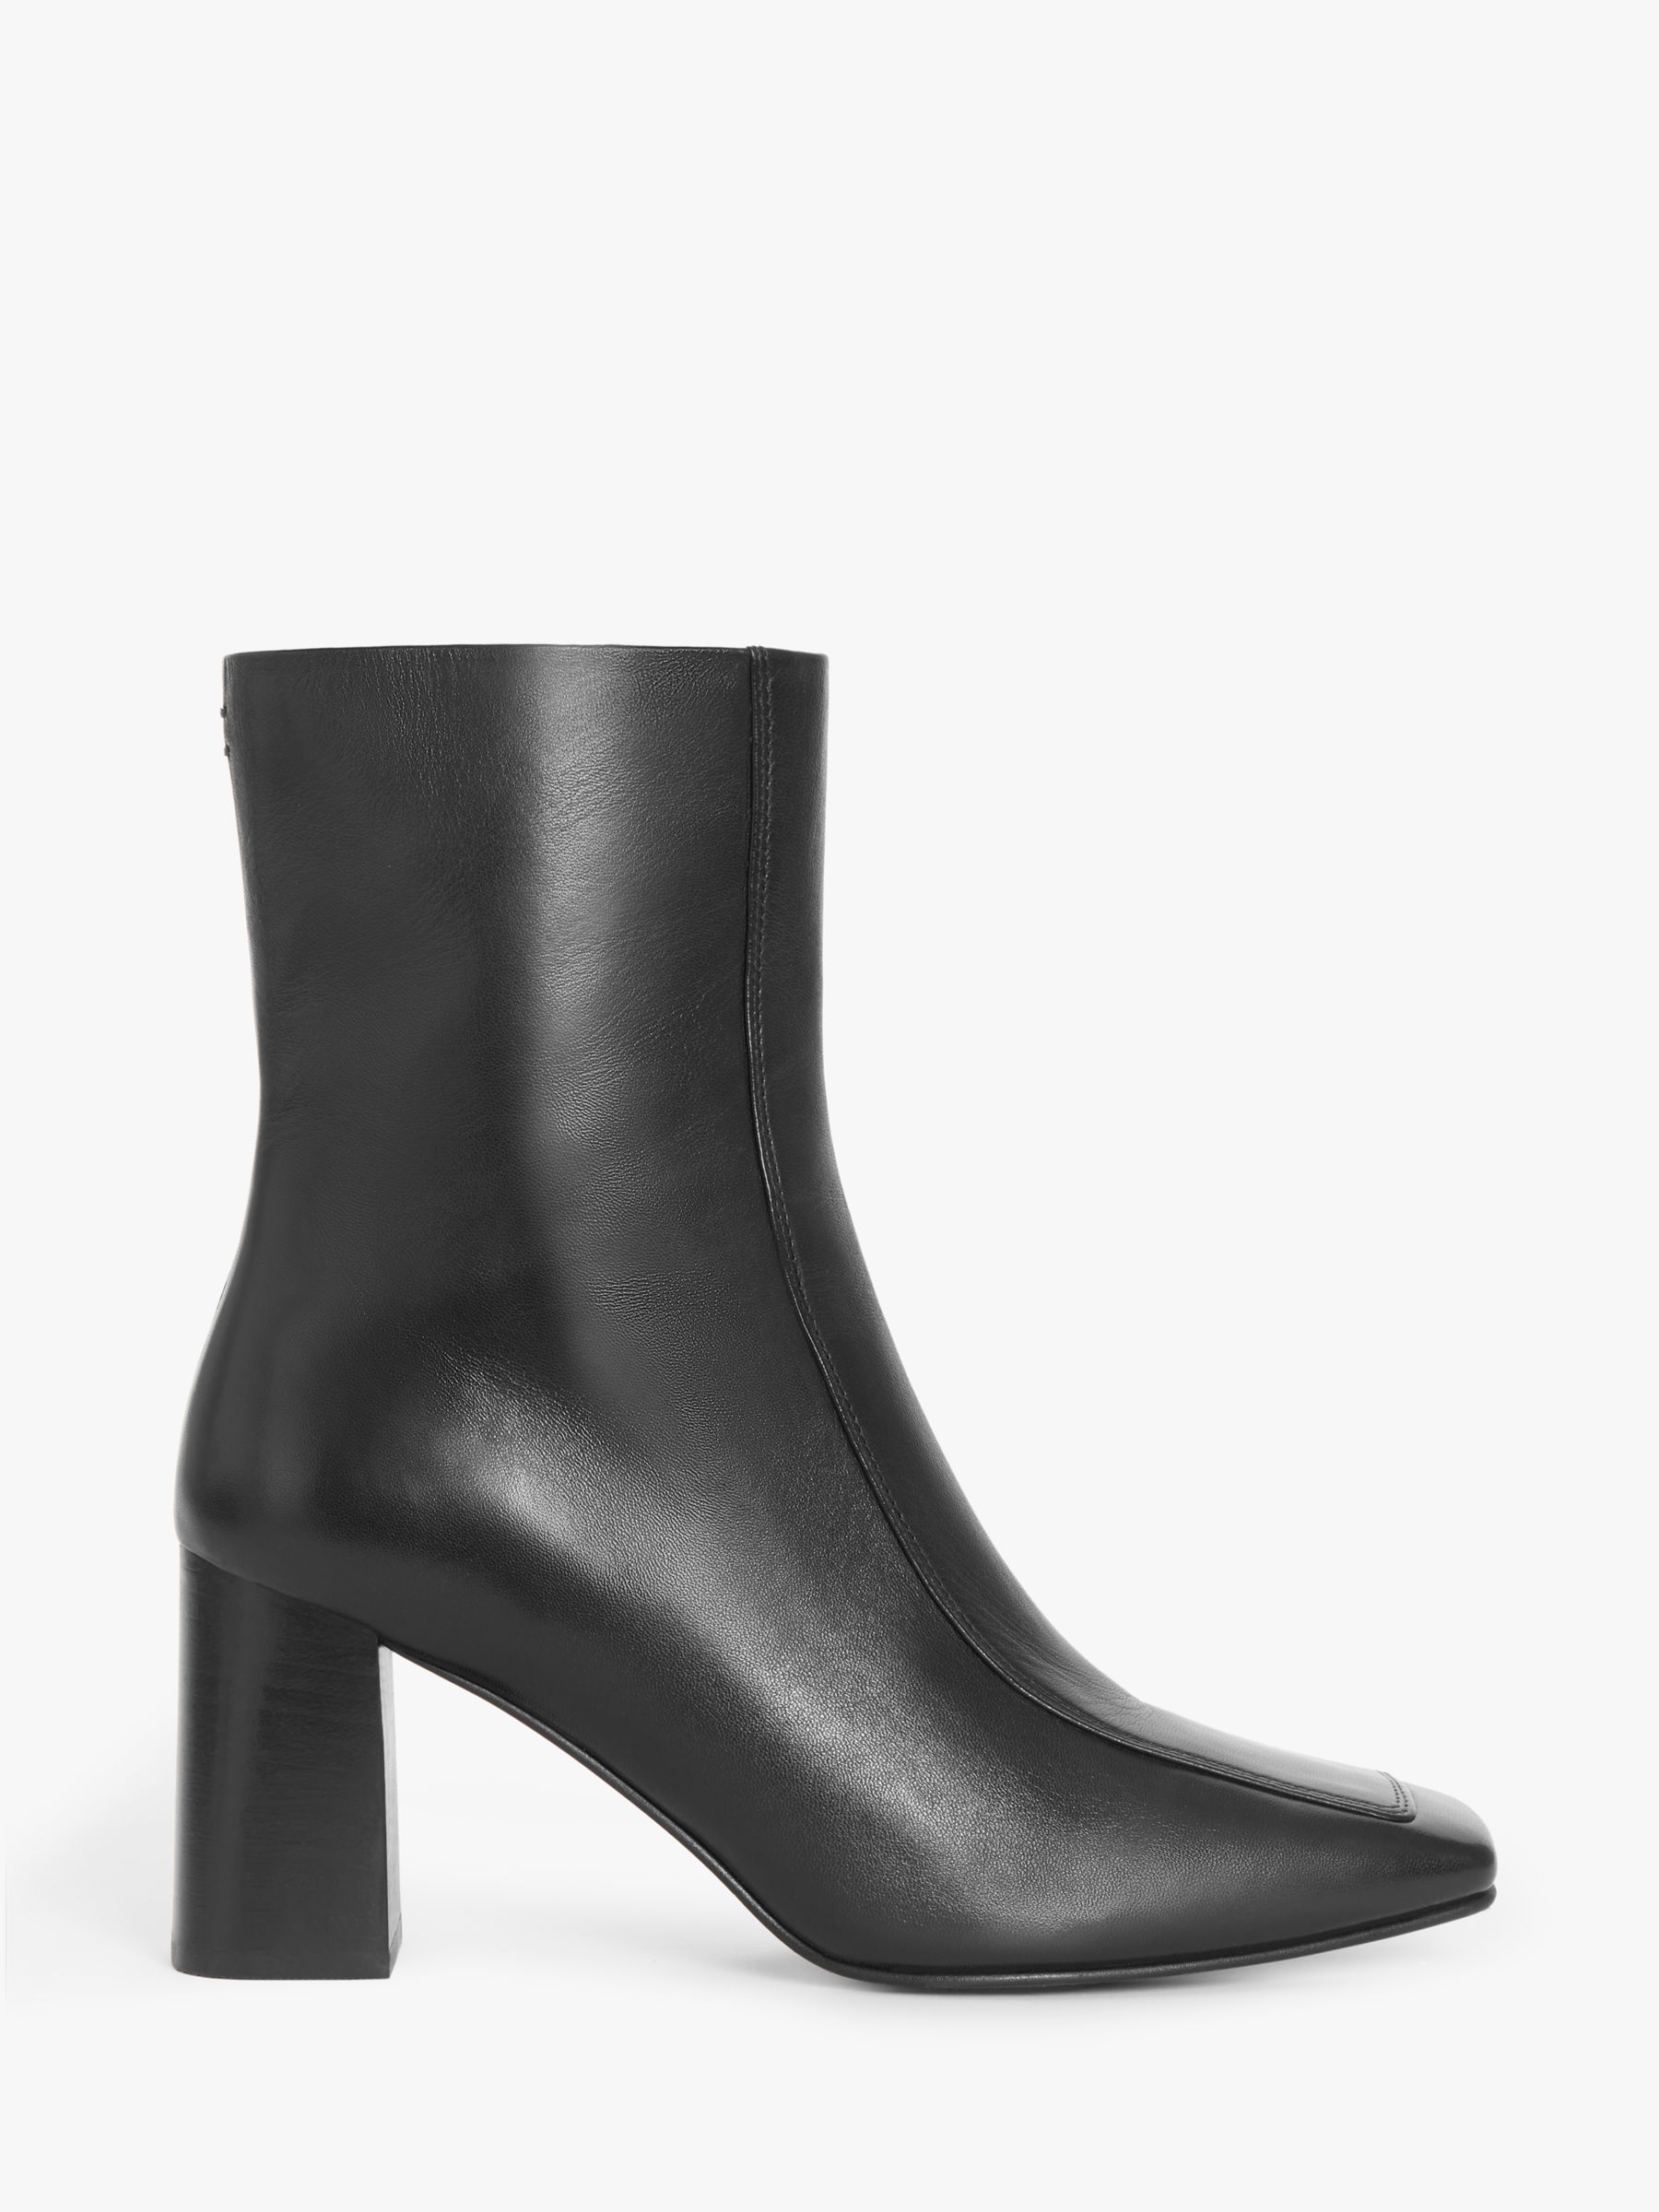 Kin Orella Leather Block Heel Square Toe Ankle Boots, Black